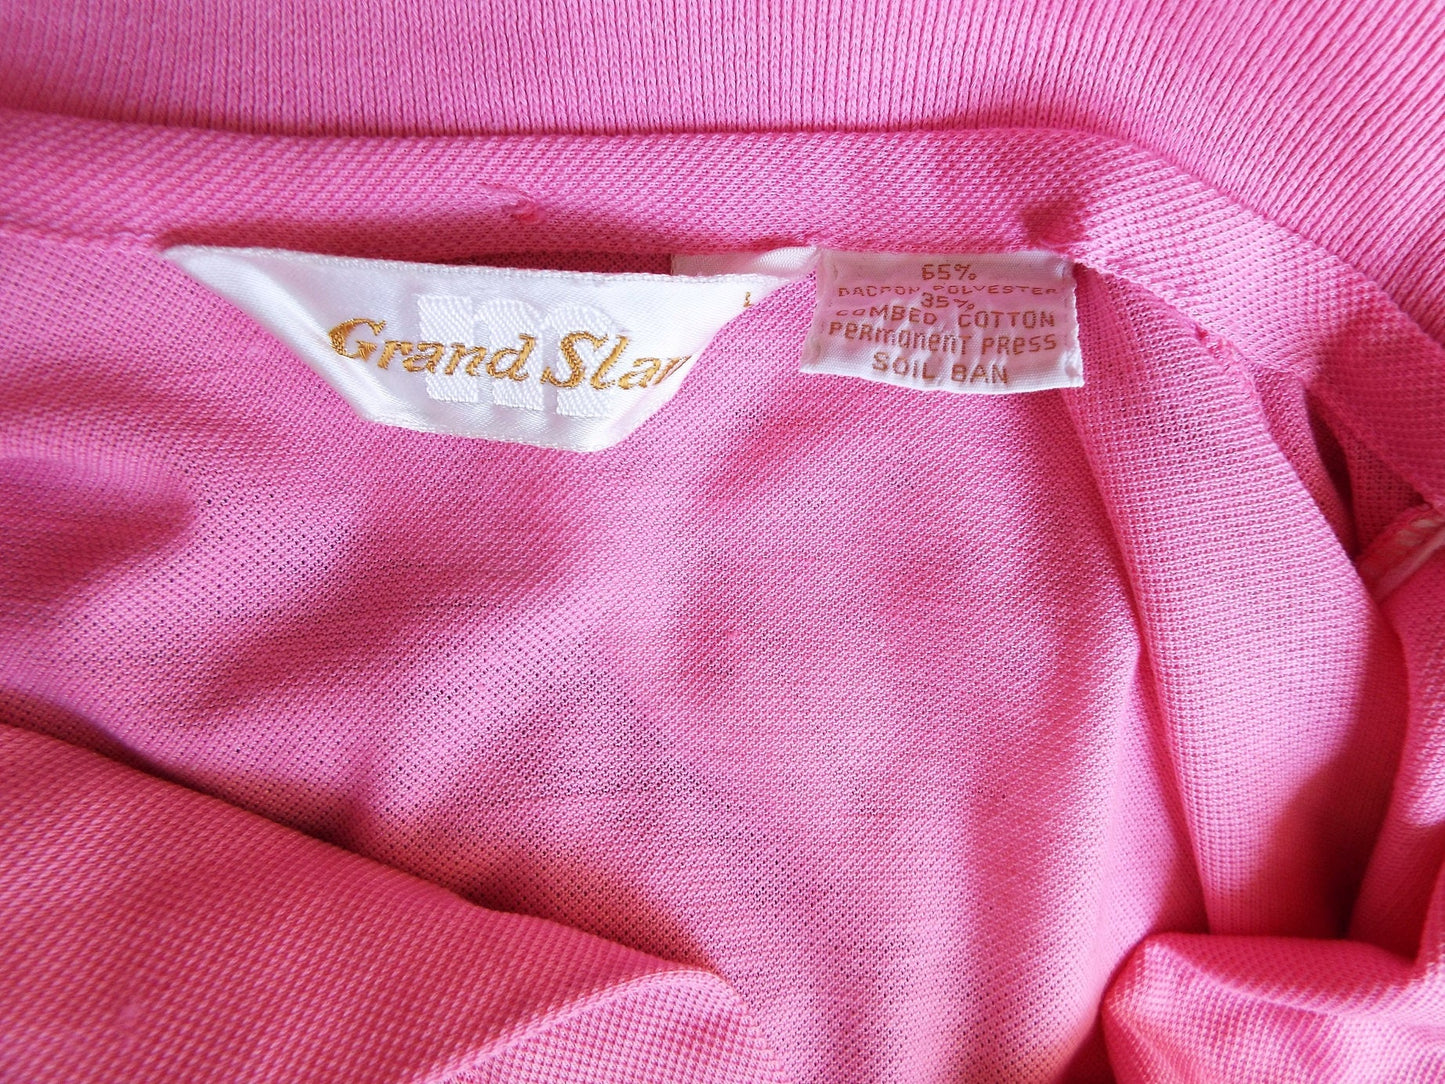 Vintage Short Sleeve Pink Polo Shirt by Munsingwear